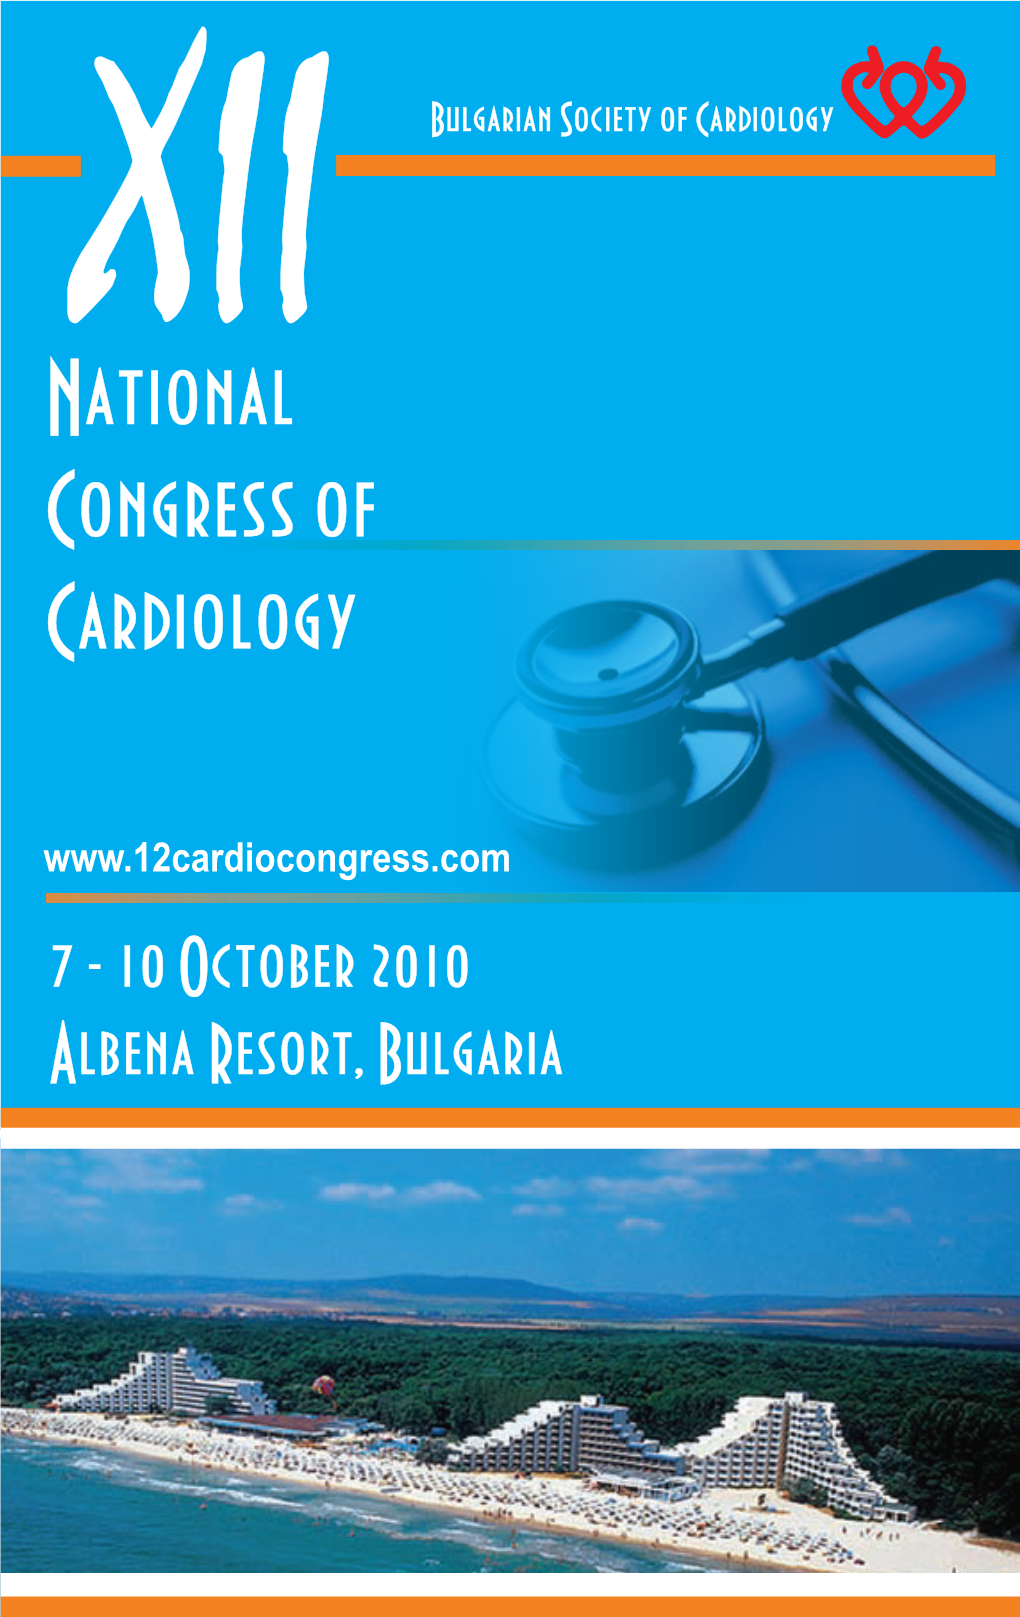 Bulgarian Society of Cardiology